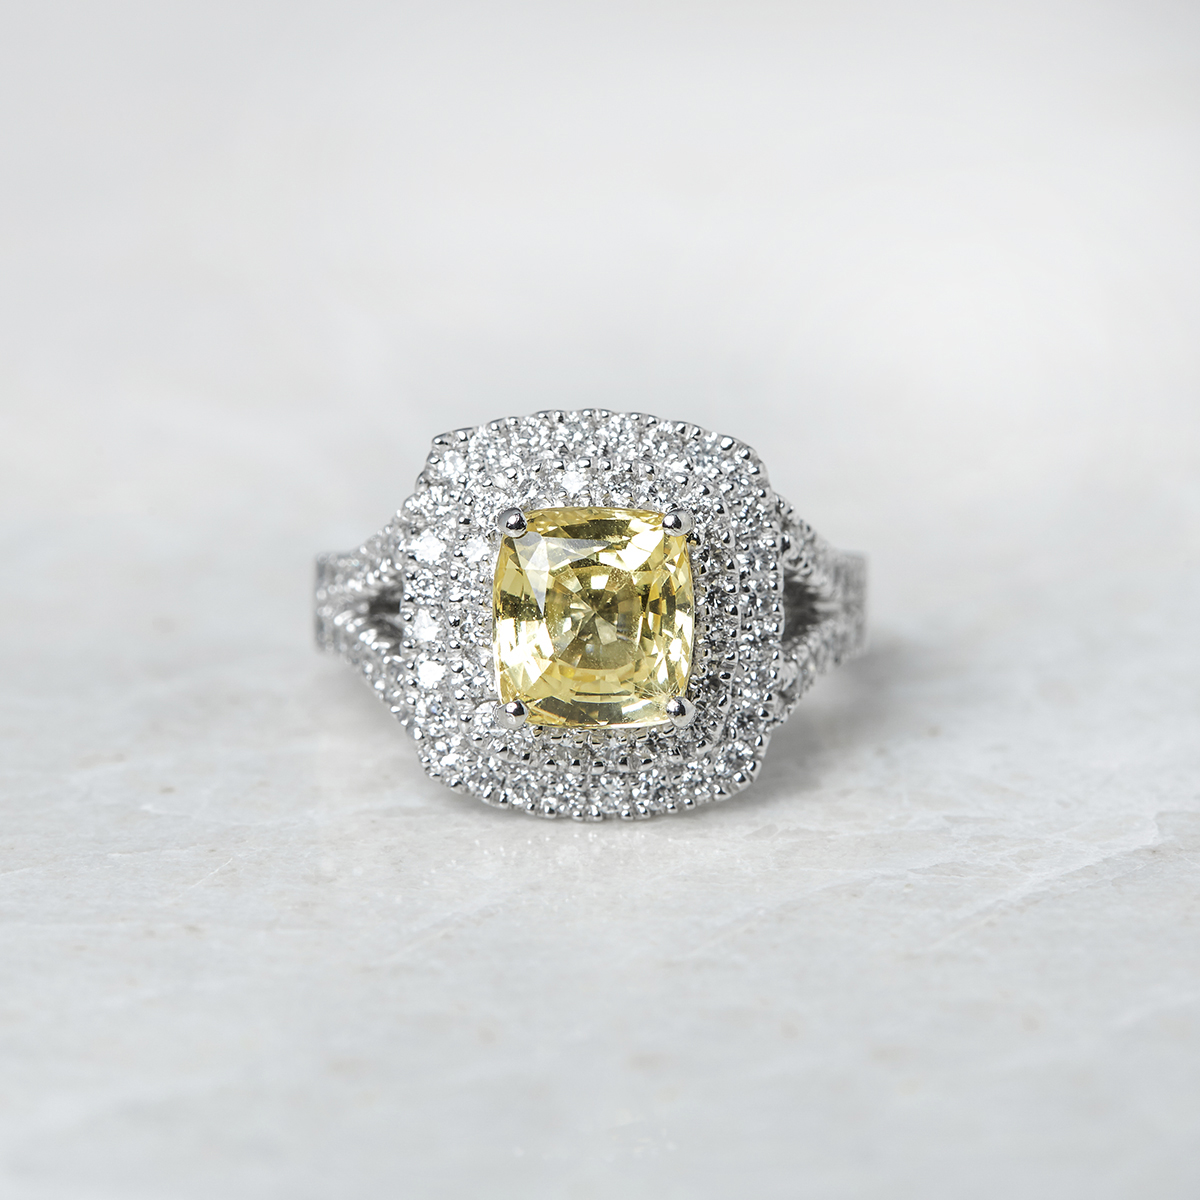 Unbranded, Platinum Cushion Cut 3.56ct Yellow Sapphire & 0.85ct Diamond Ring